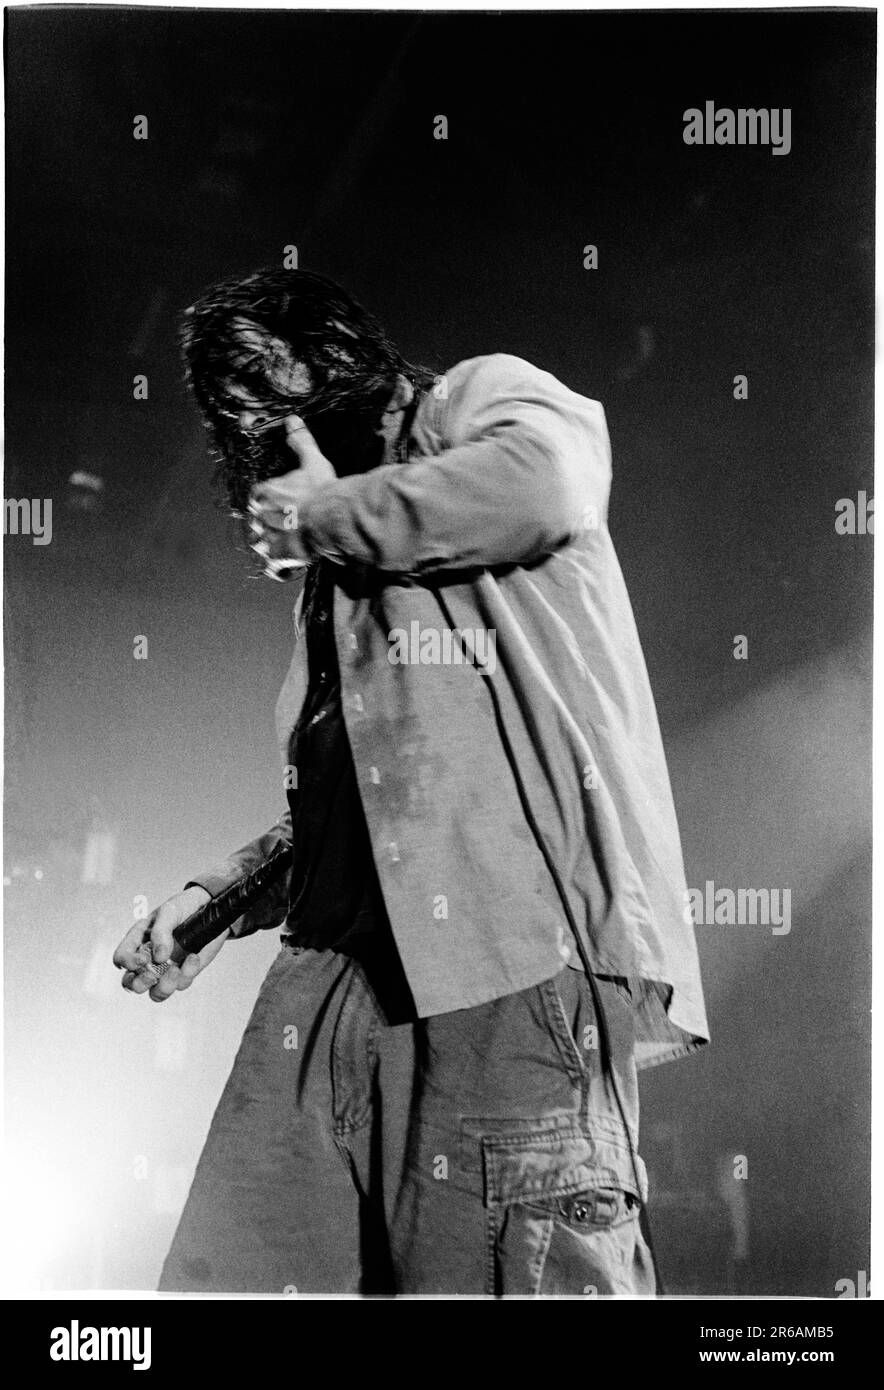 Singer Phil Anselmo of Pantera playing live at Newport Centre in Newport, Wales, UK on 24 April 2000. Photograph: Rob Watkins Stock Photo